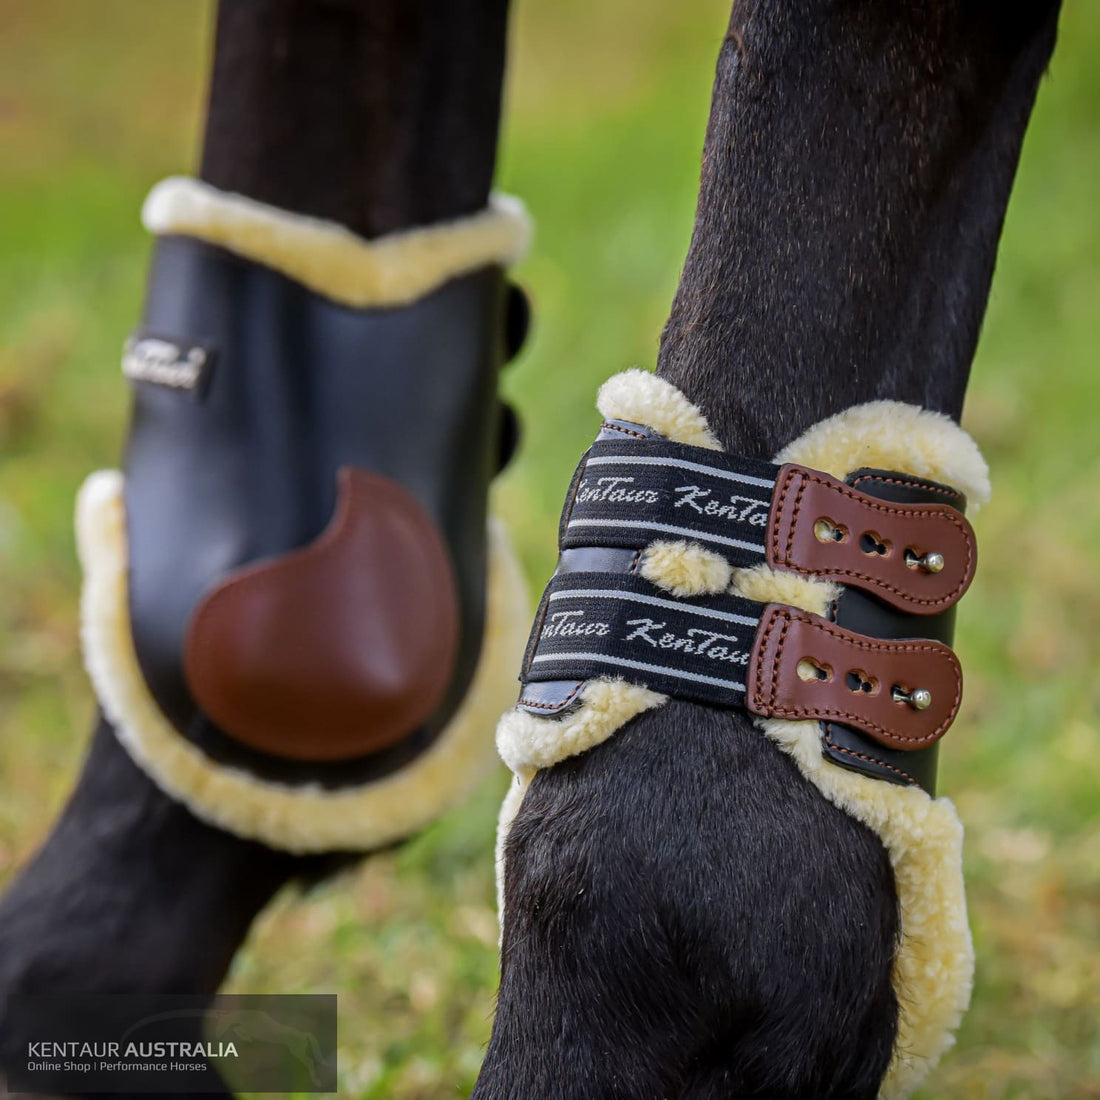 Kentaur ‘Roma’ Hind Boot with Sheepskin Jumping Boots